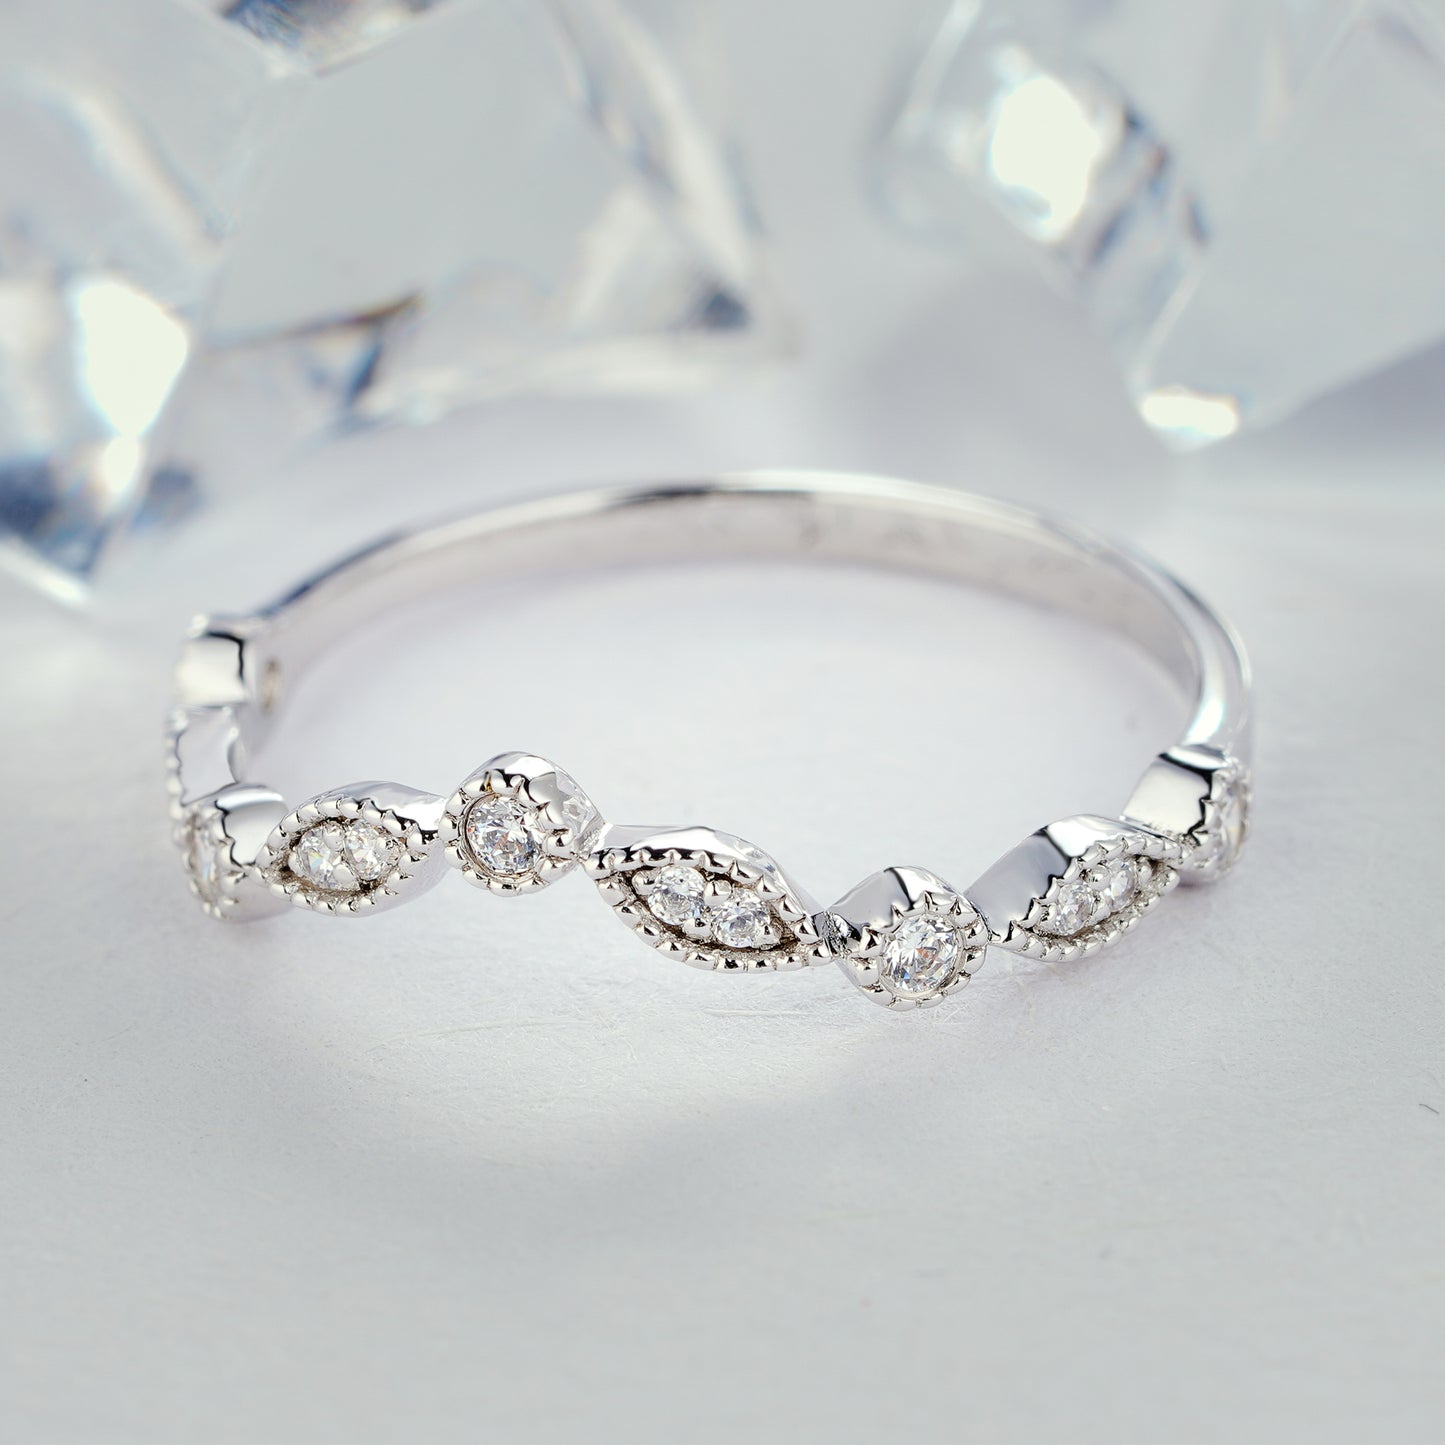 Natural Real Diamond Wedding Band Half Eternity V Shape Ring in 14K/18K Gold - ShainJewelry